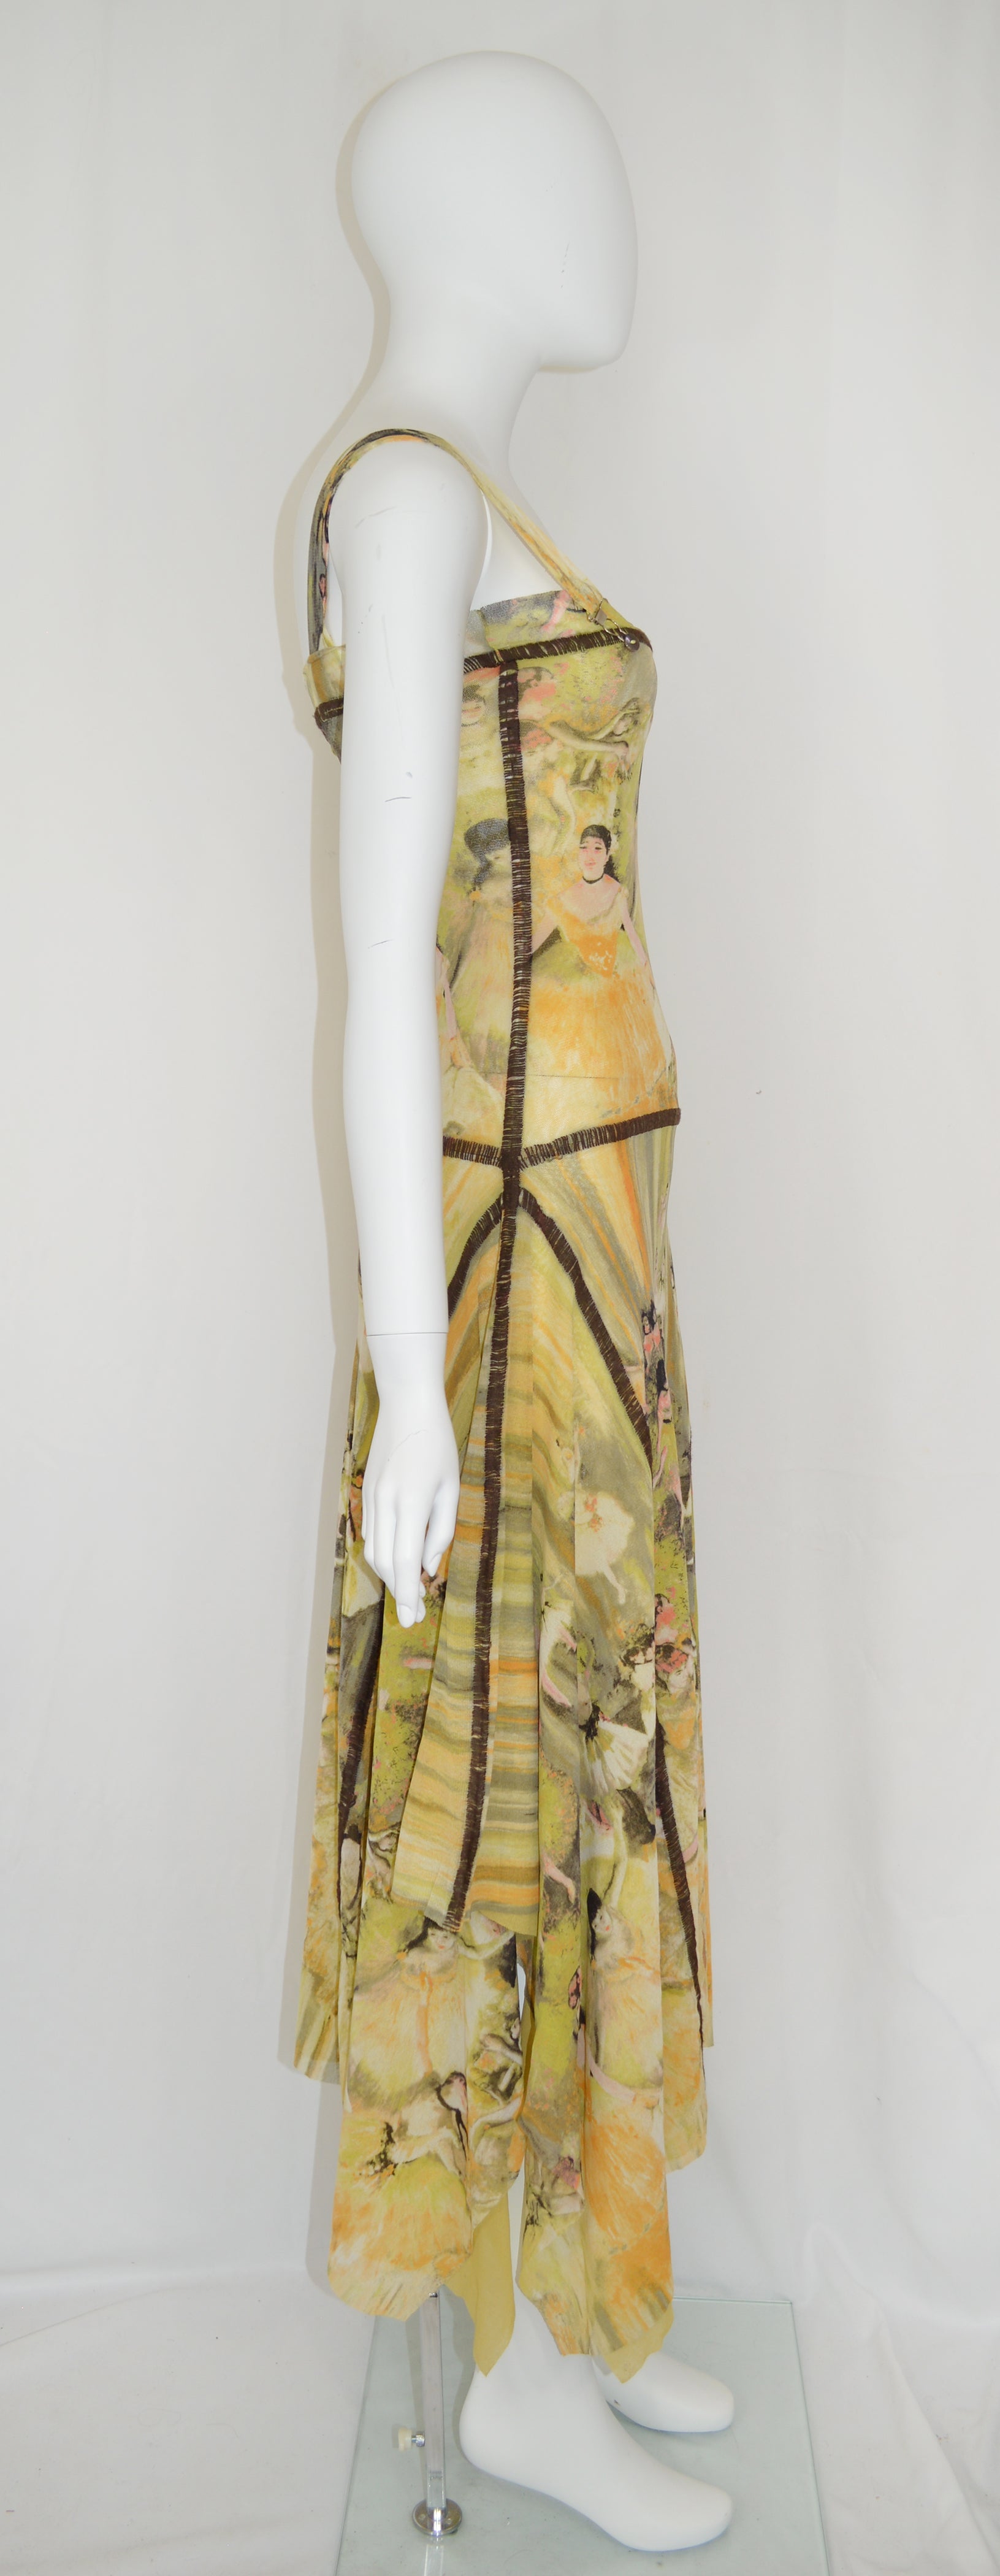 Jean Paul Gaultier Degas Ballerina Print Dress